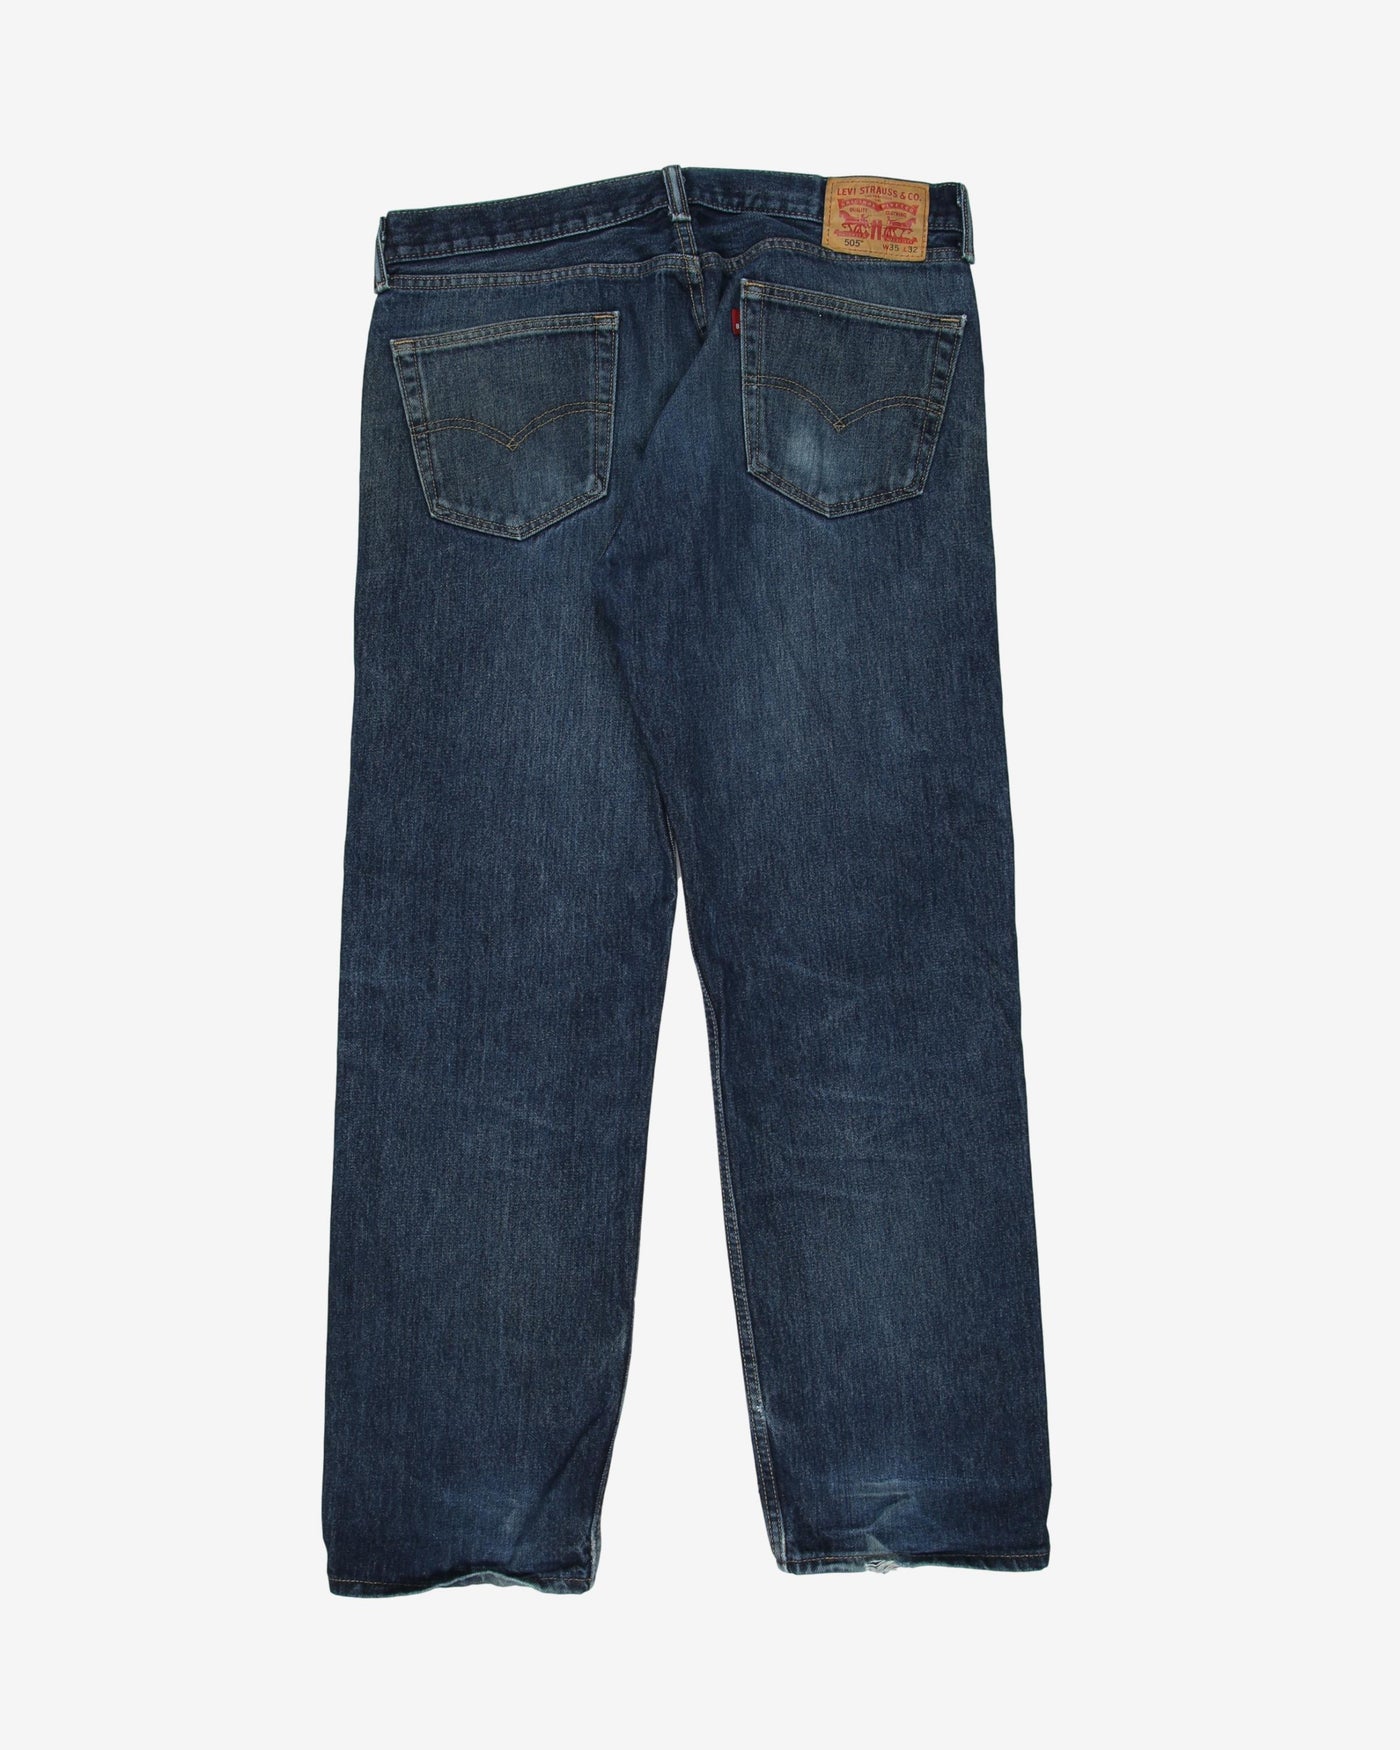 Levis 505 dark wash blue jeans - w32l29